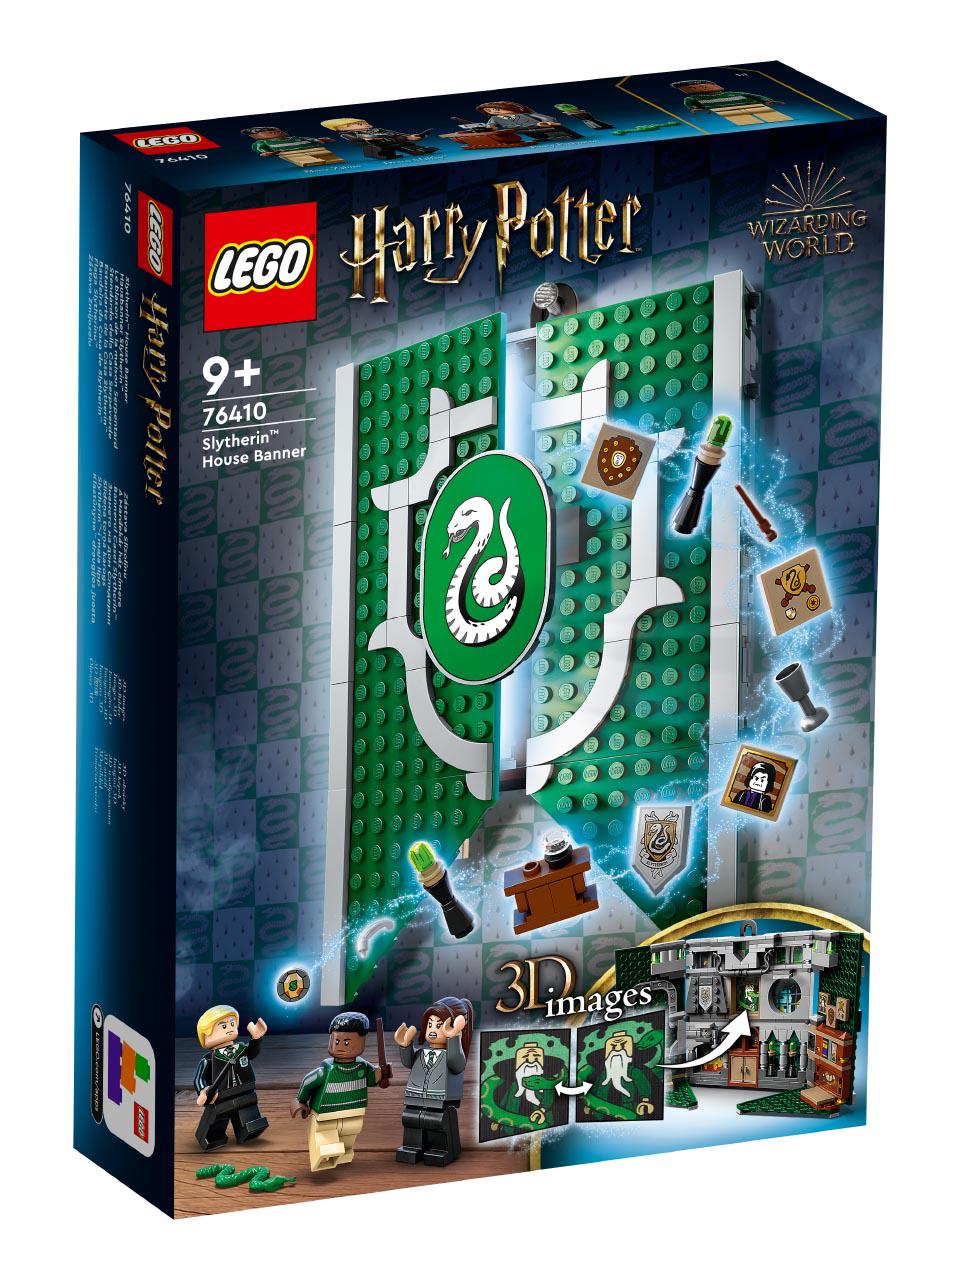 Slytherin™ House Banner 76410, Harry Potter™